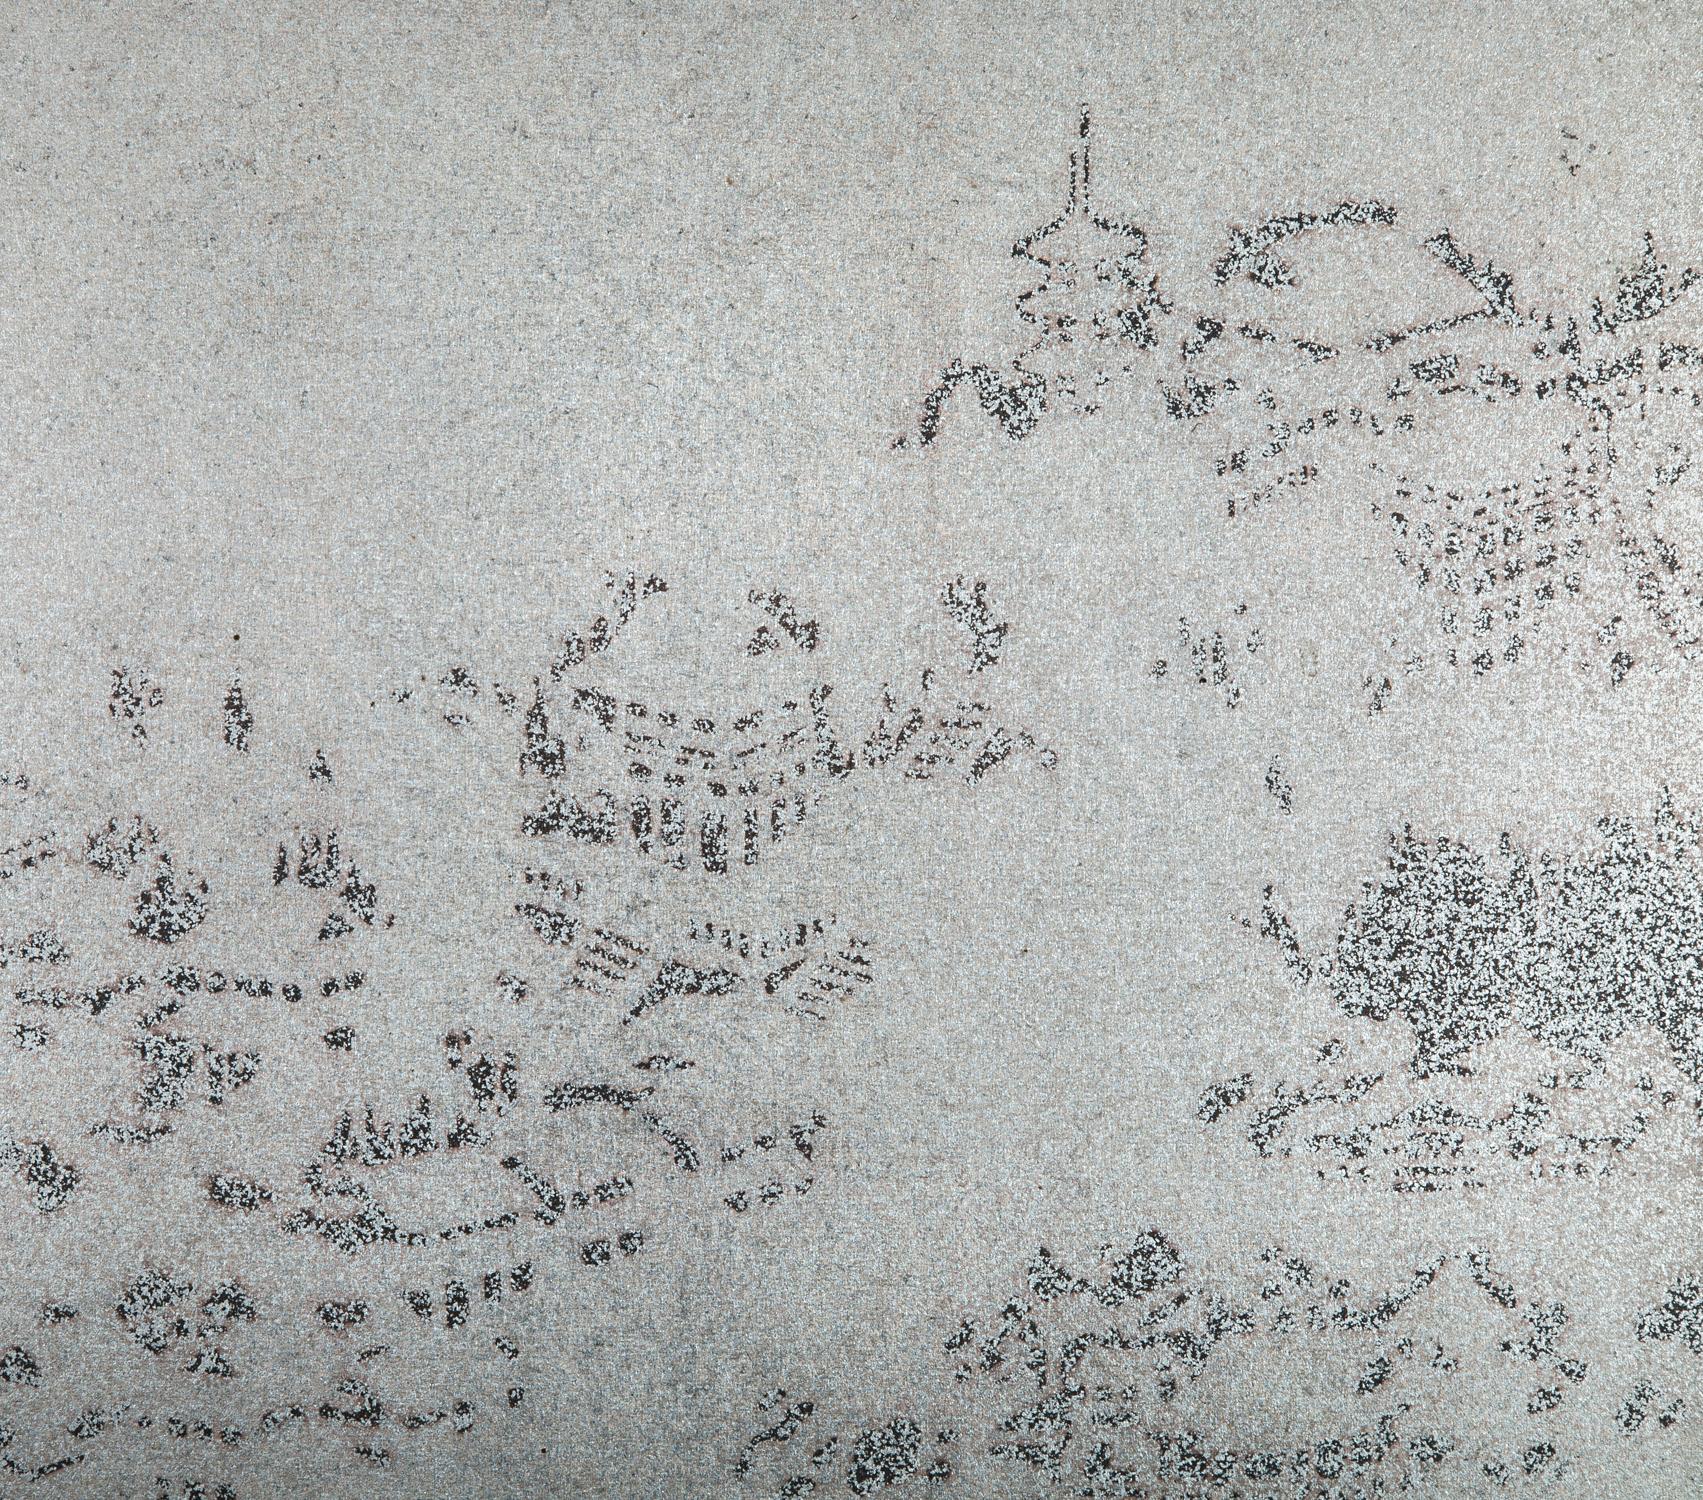 Meiji Japanese Two-Panel Screen Abstract Landscape of the Higashiyama Hills, Japan